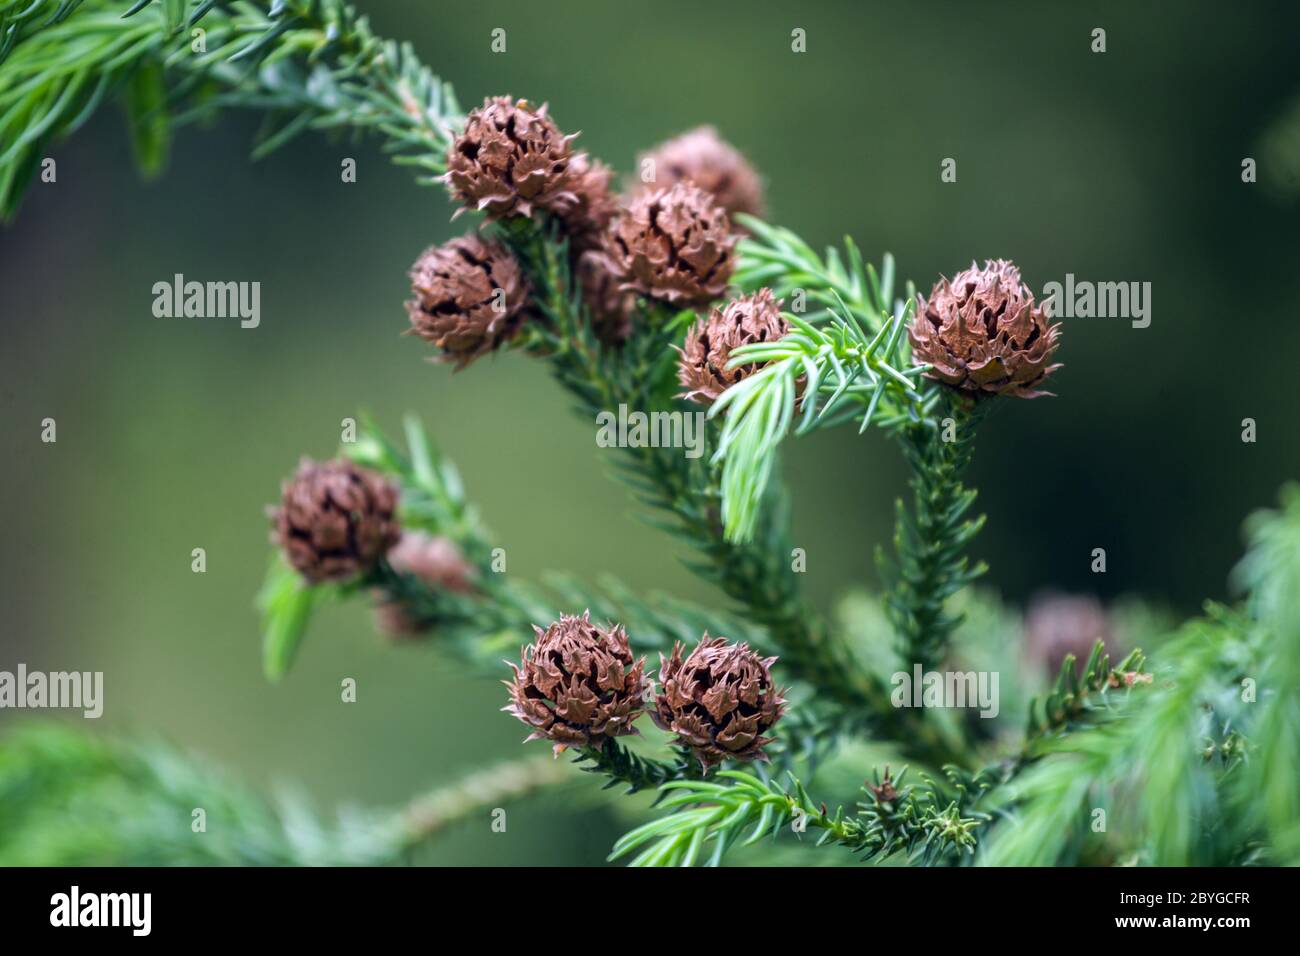 Cryptomeria japonica small cones on a twig, Japanese cedar Cryptomeria japonica cone Stock Photo